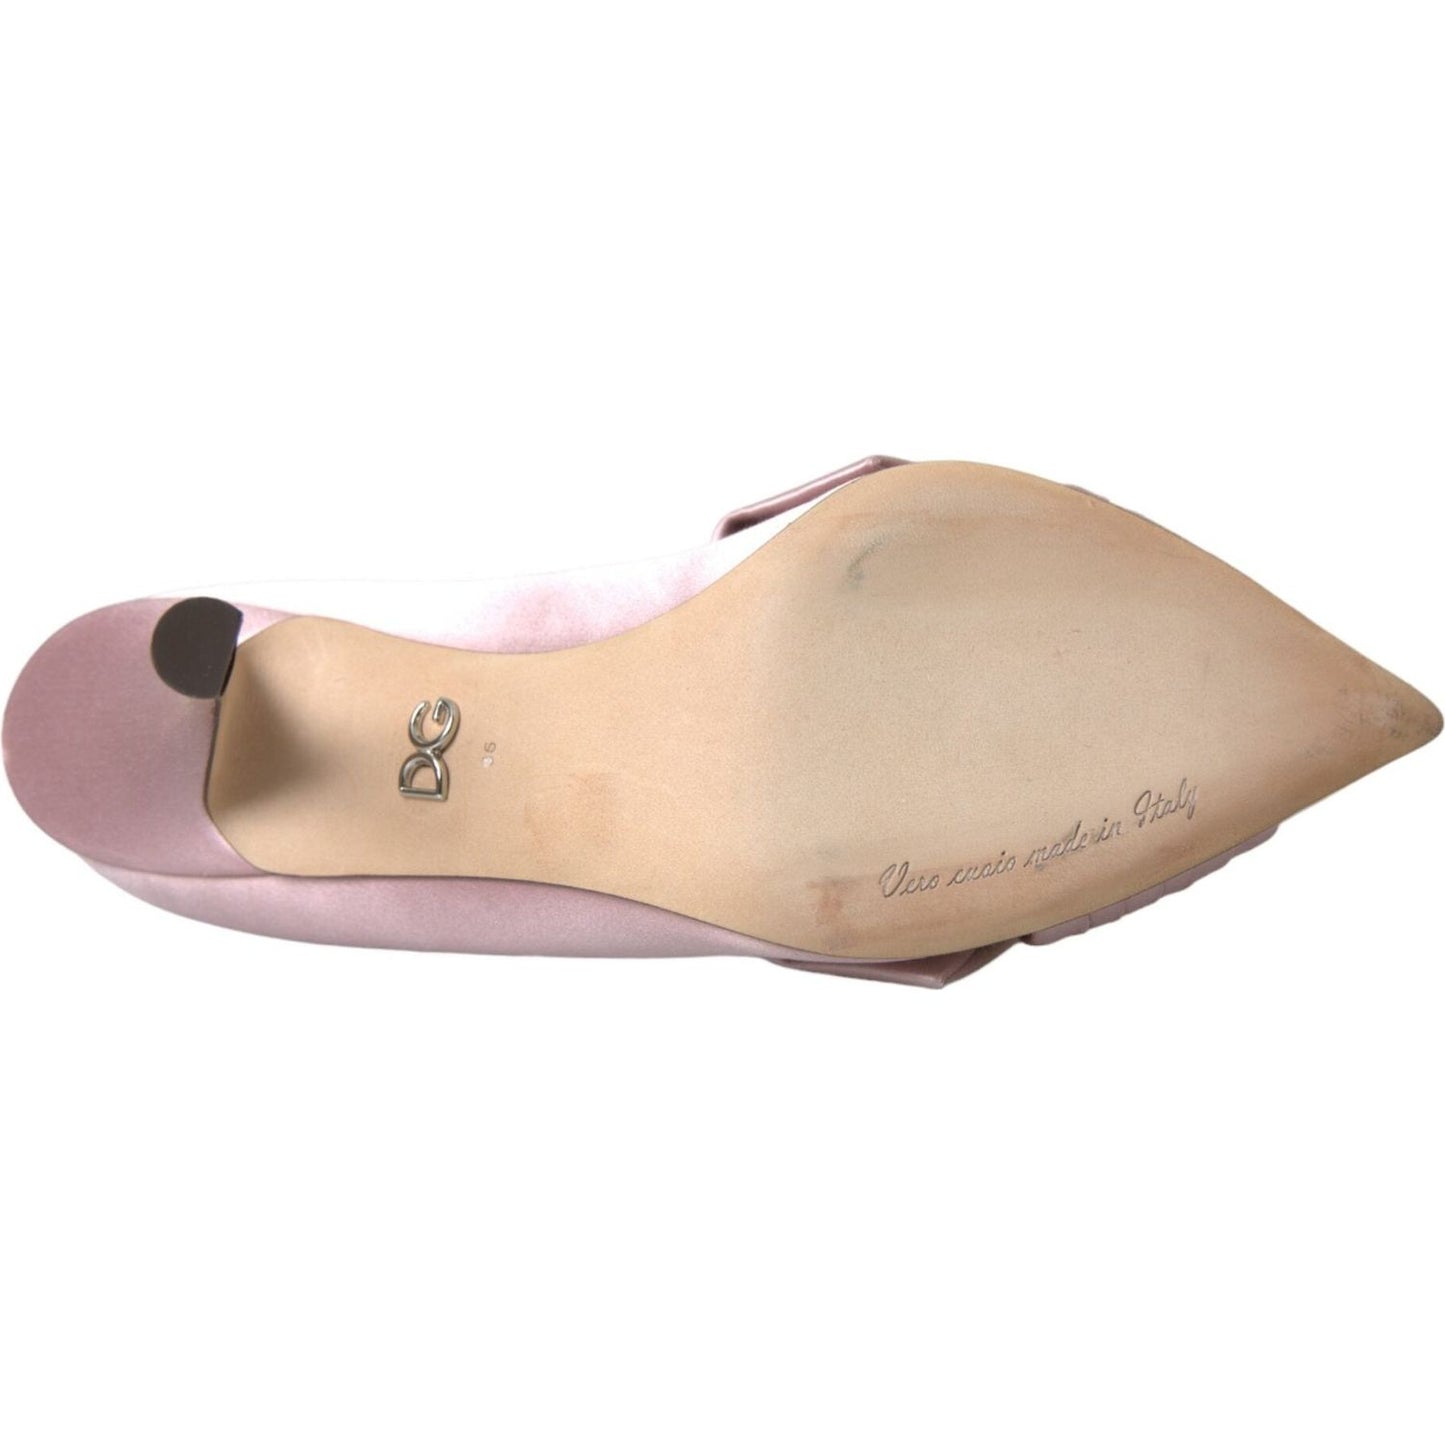 Dolce & Gabbana Pink Satin Crystal High Heels Pumps Shoes pink-satin-crystal-high-heels-pumps-shoes